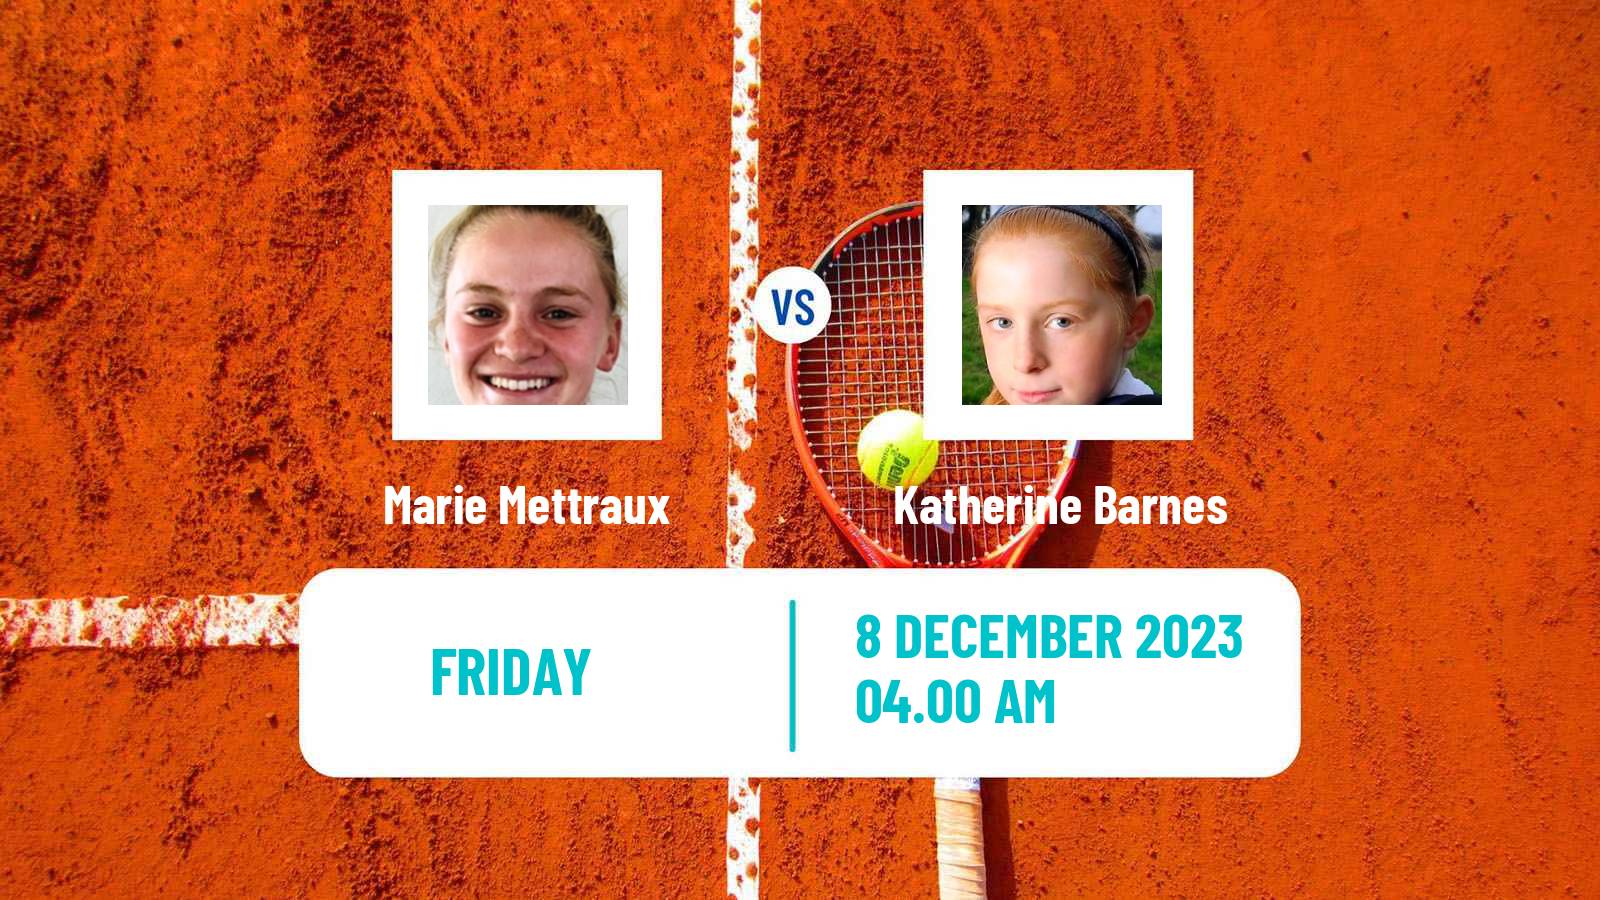 Tennis ITF W15 Antalya 21 Women Marie Mettraux - Katherine Barnes